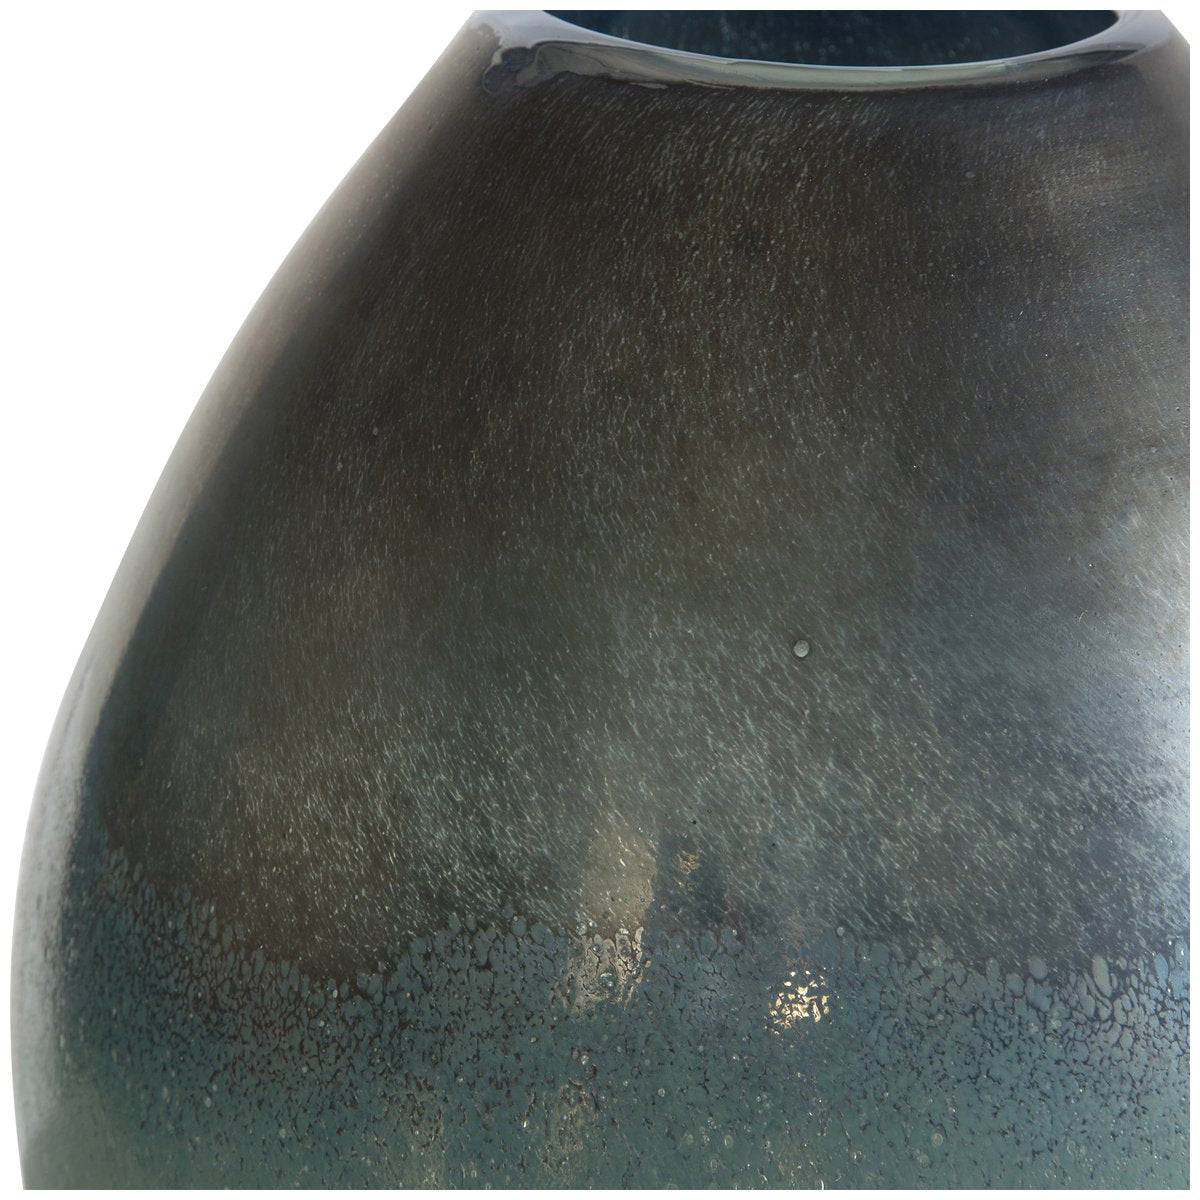 Uttermost Rian Aqua Bronze Vases, 2-Piece Set